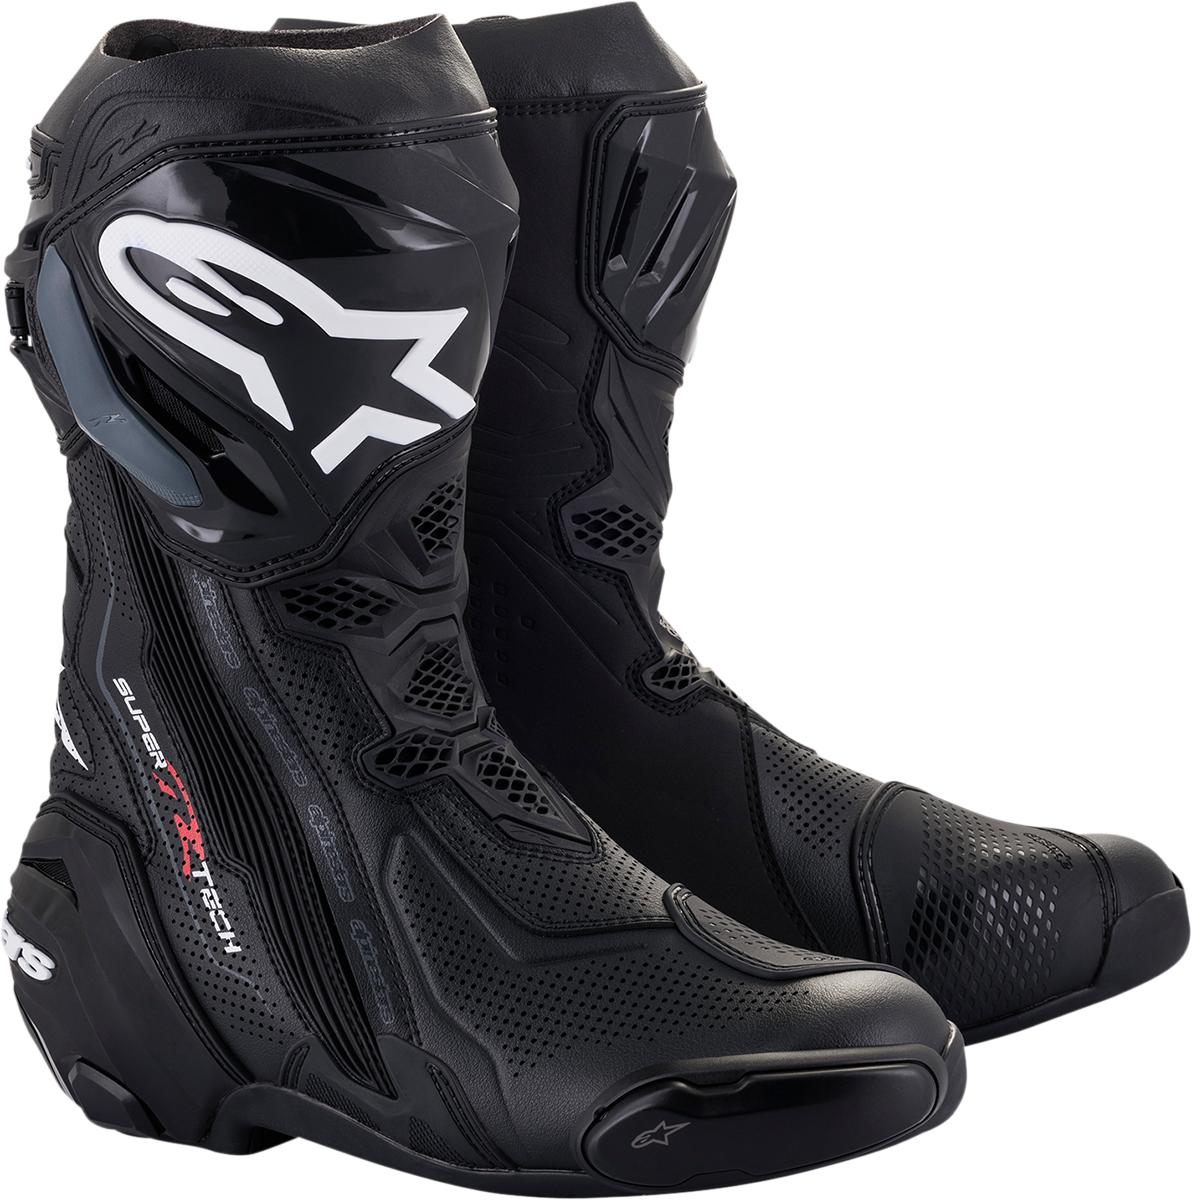 ALPINESTARS Supertech V Boots - Black - US 6.5 / EU 40 2220121-10-40